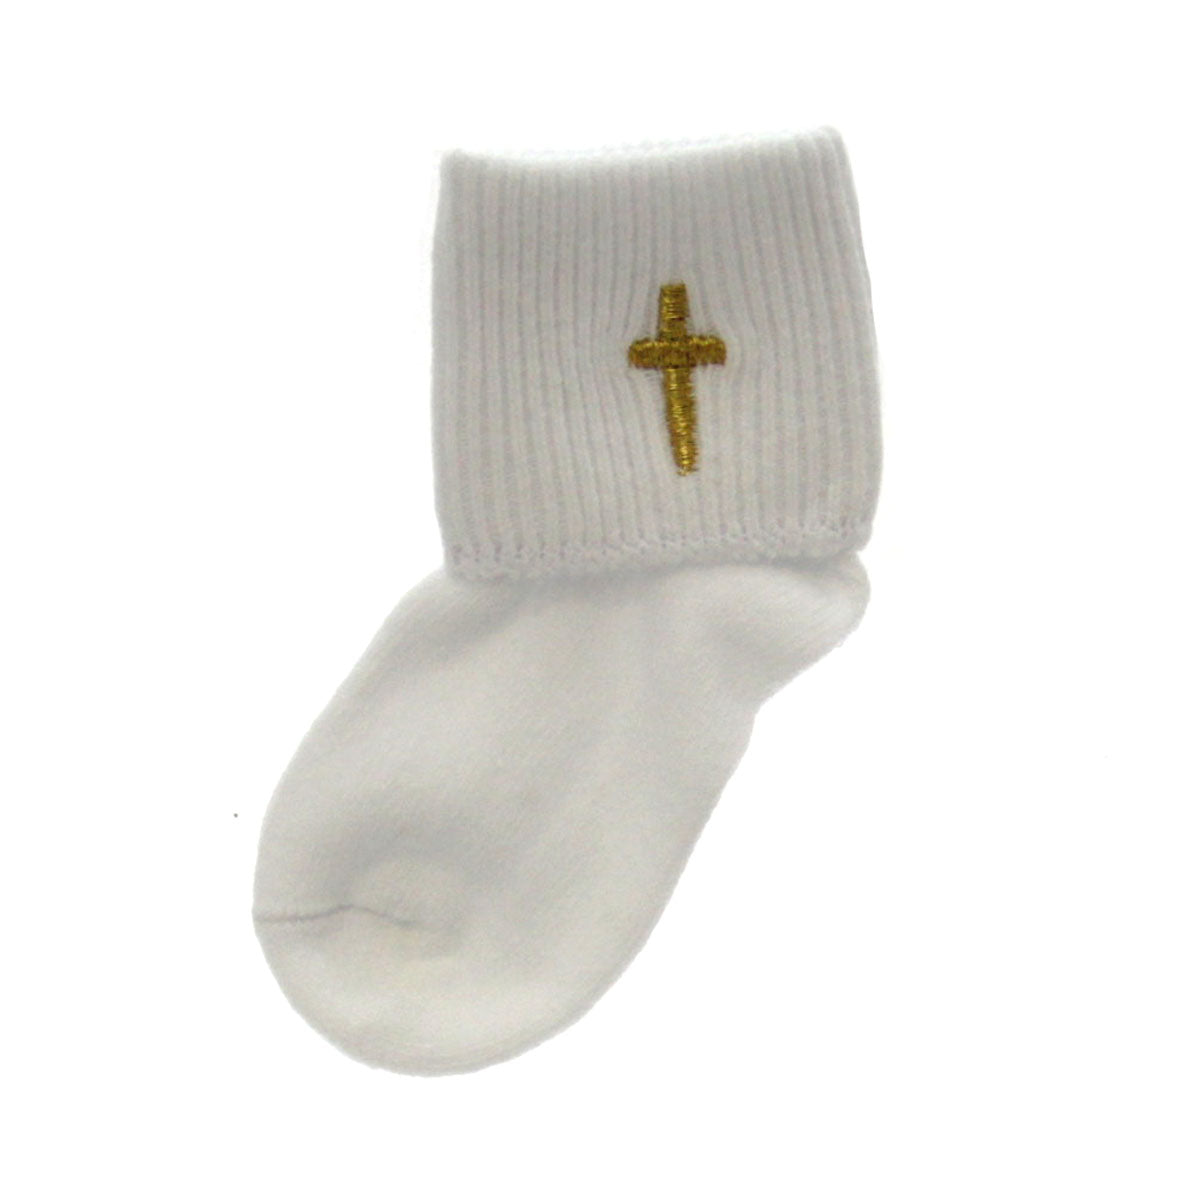 Baptismal Socks with Cross